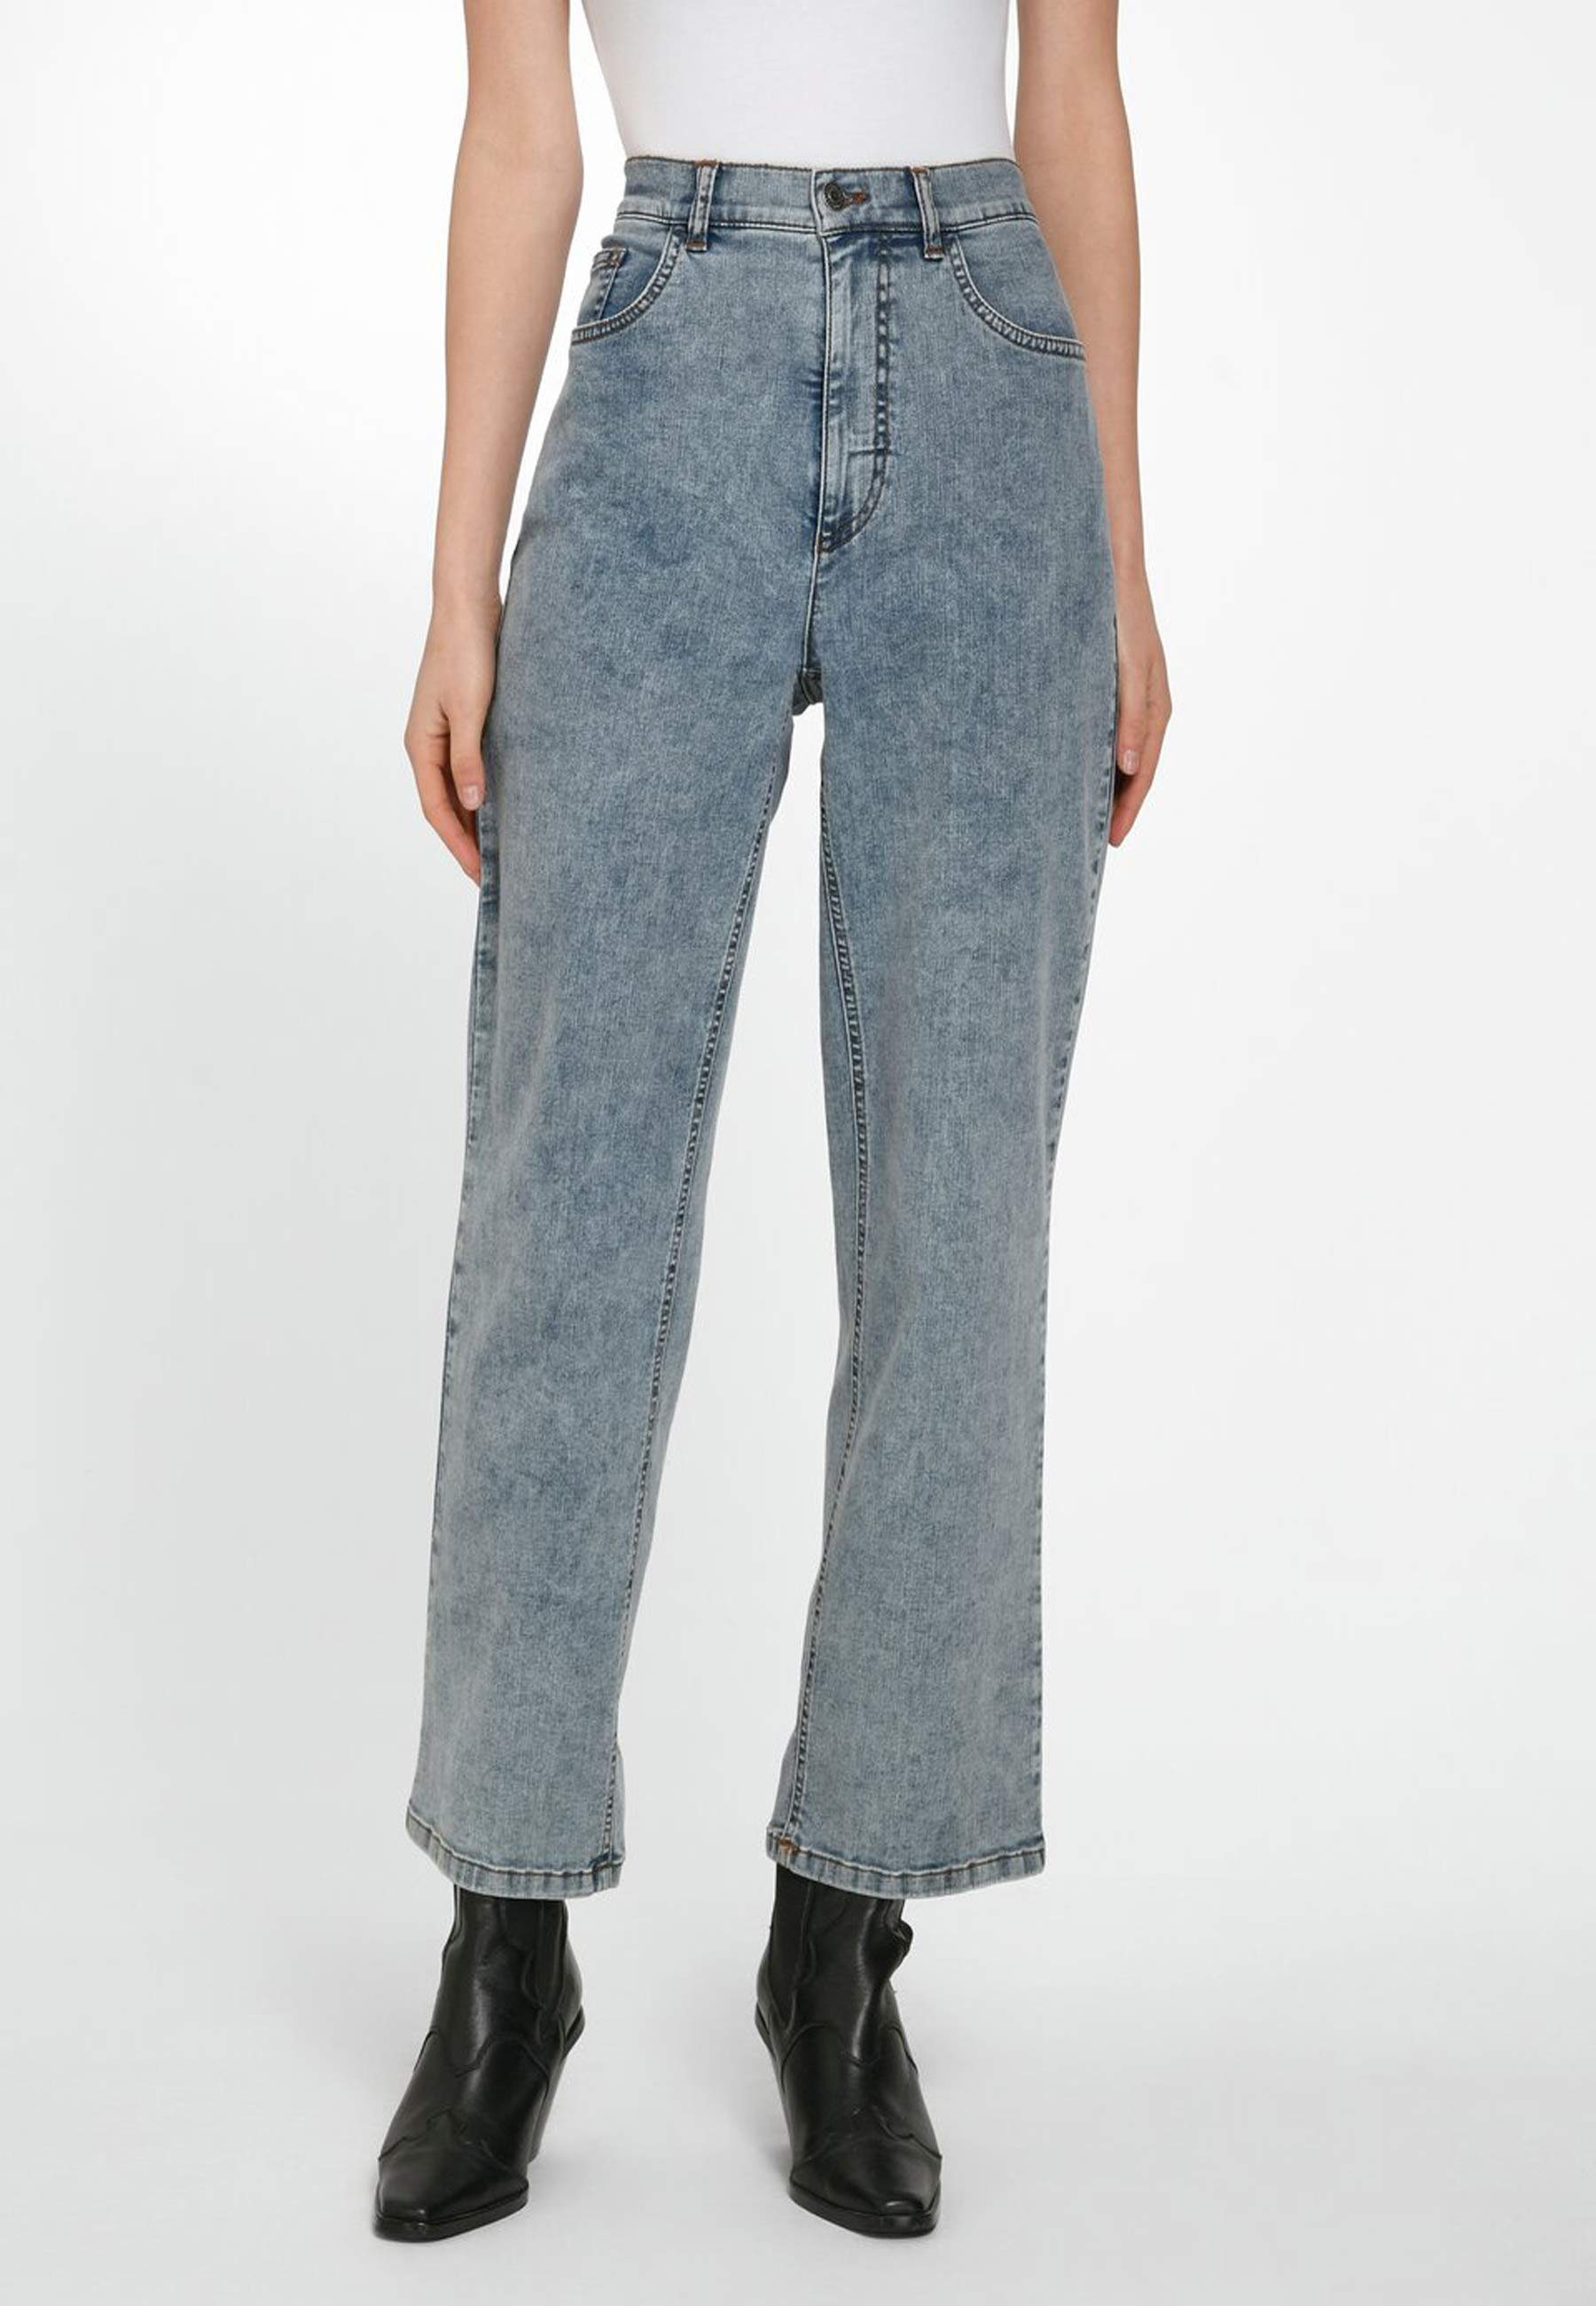 WALL London 5-Pocket-Jeans hellblau modernem Design mit Cotton